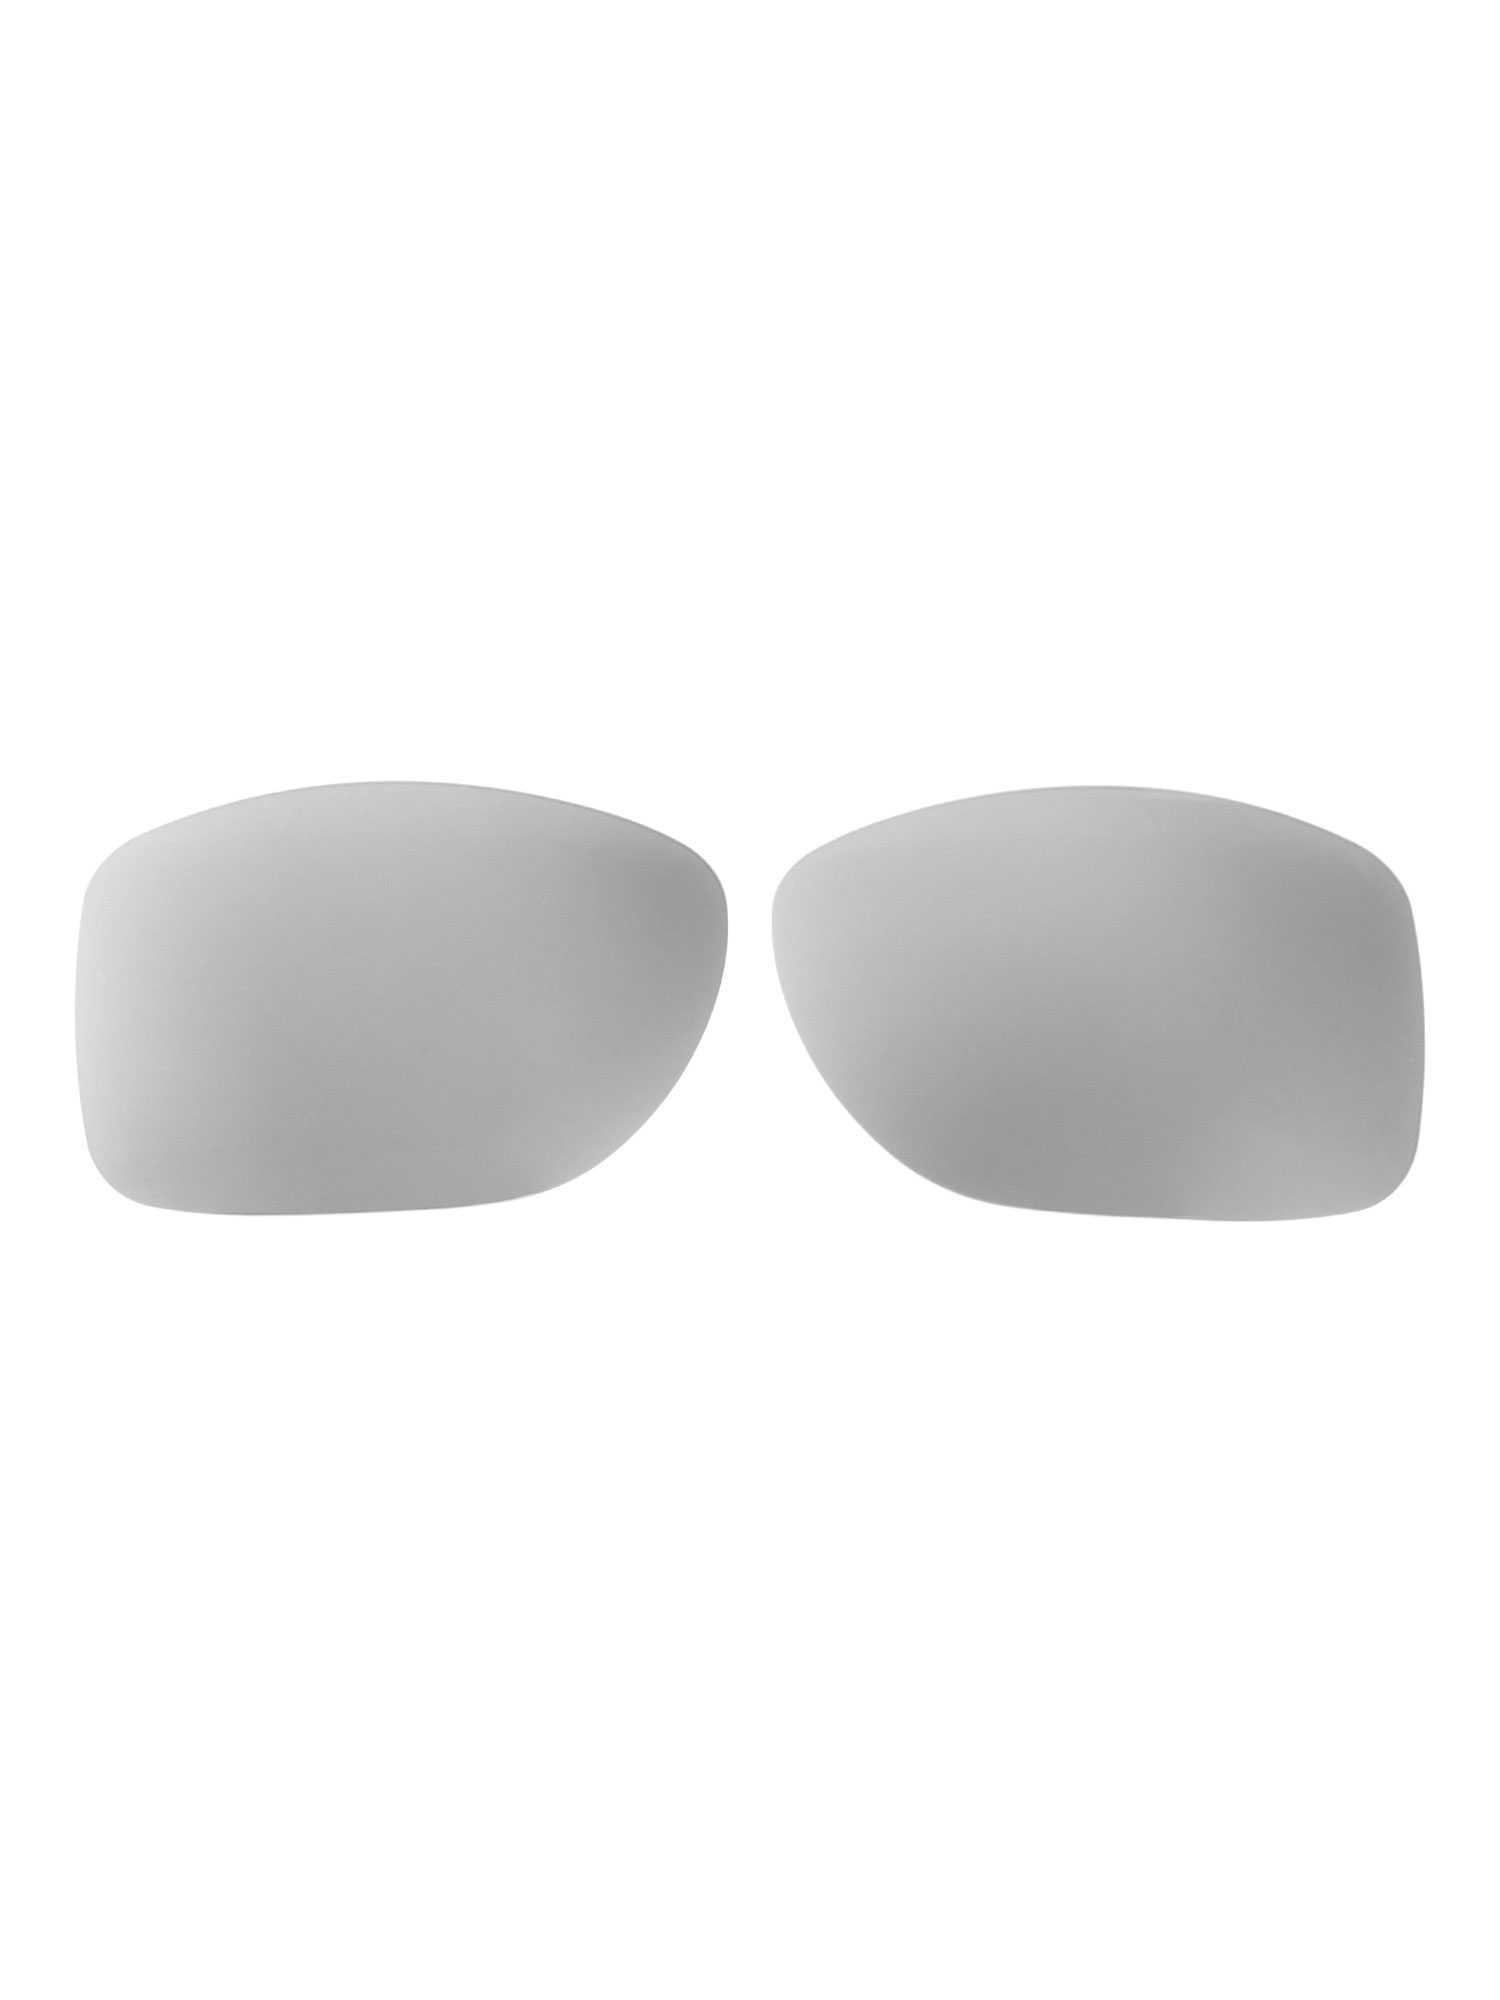 Walleva Titanium Polarized Replacement Lenses for Oakley Gauge 8 M Sunglasses - image 1 of 7